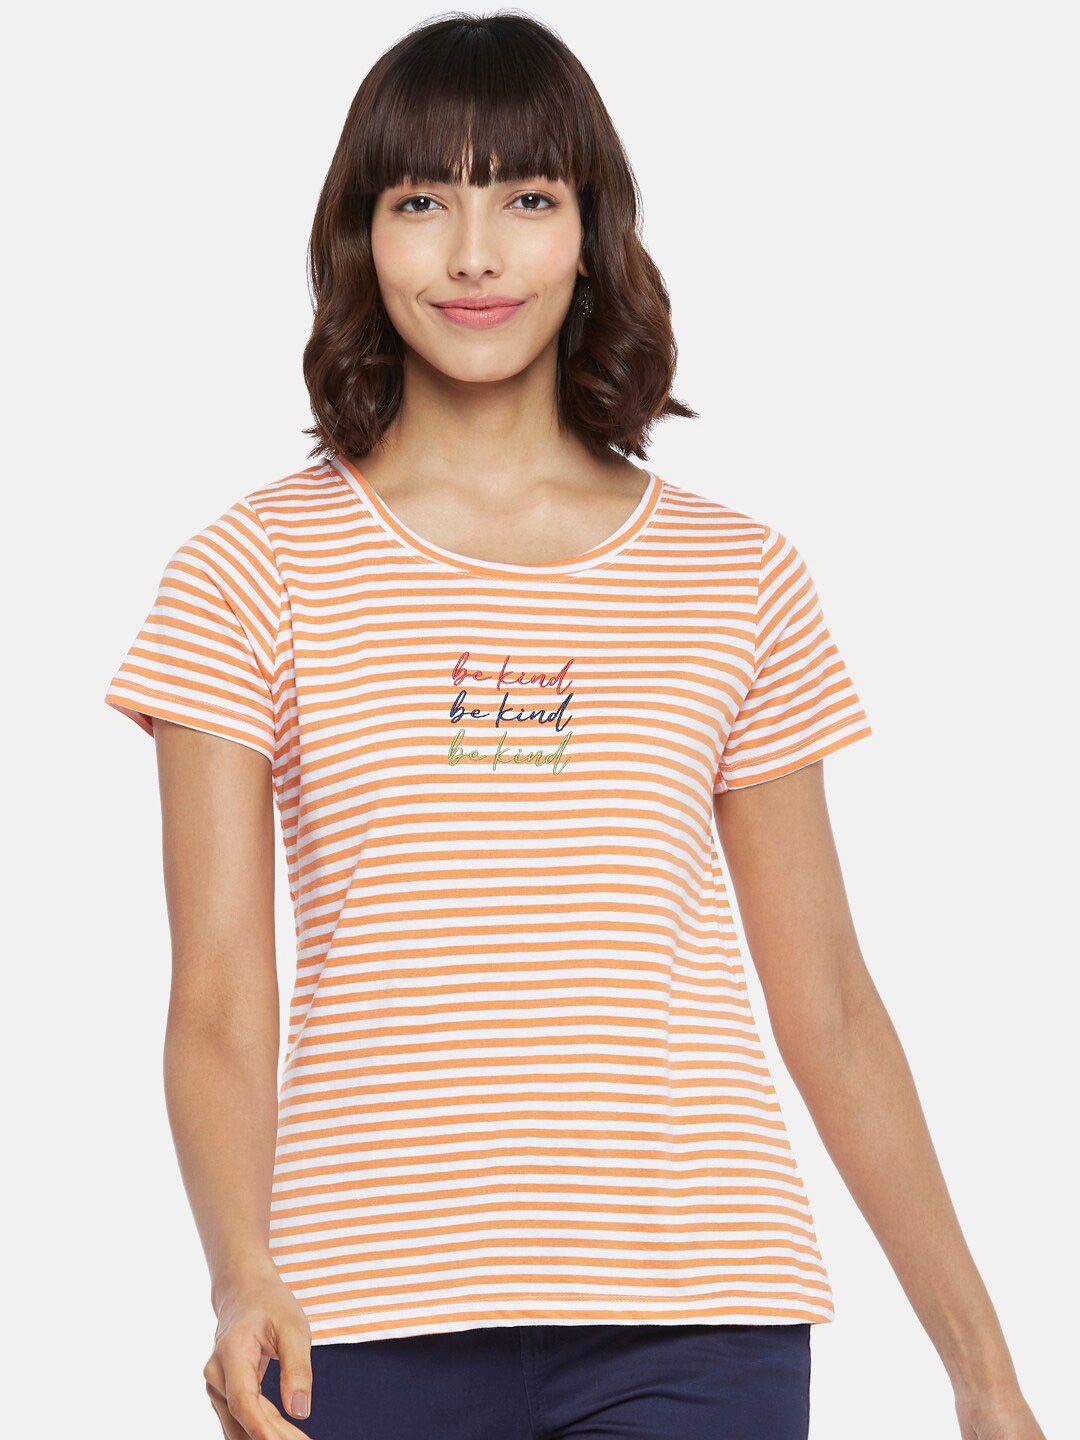 honey by pantaloons women orange striped t-shirt